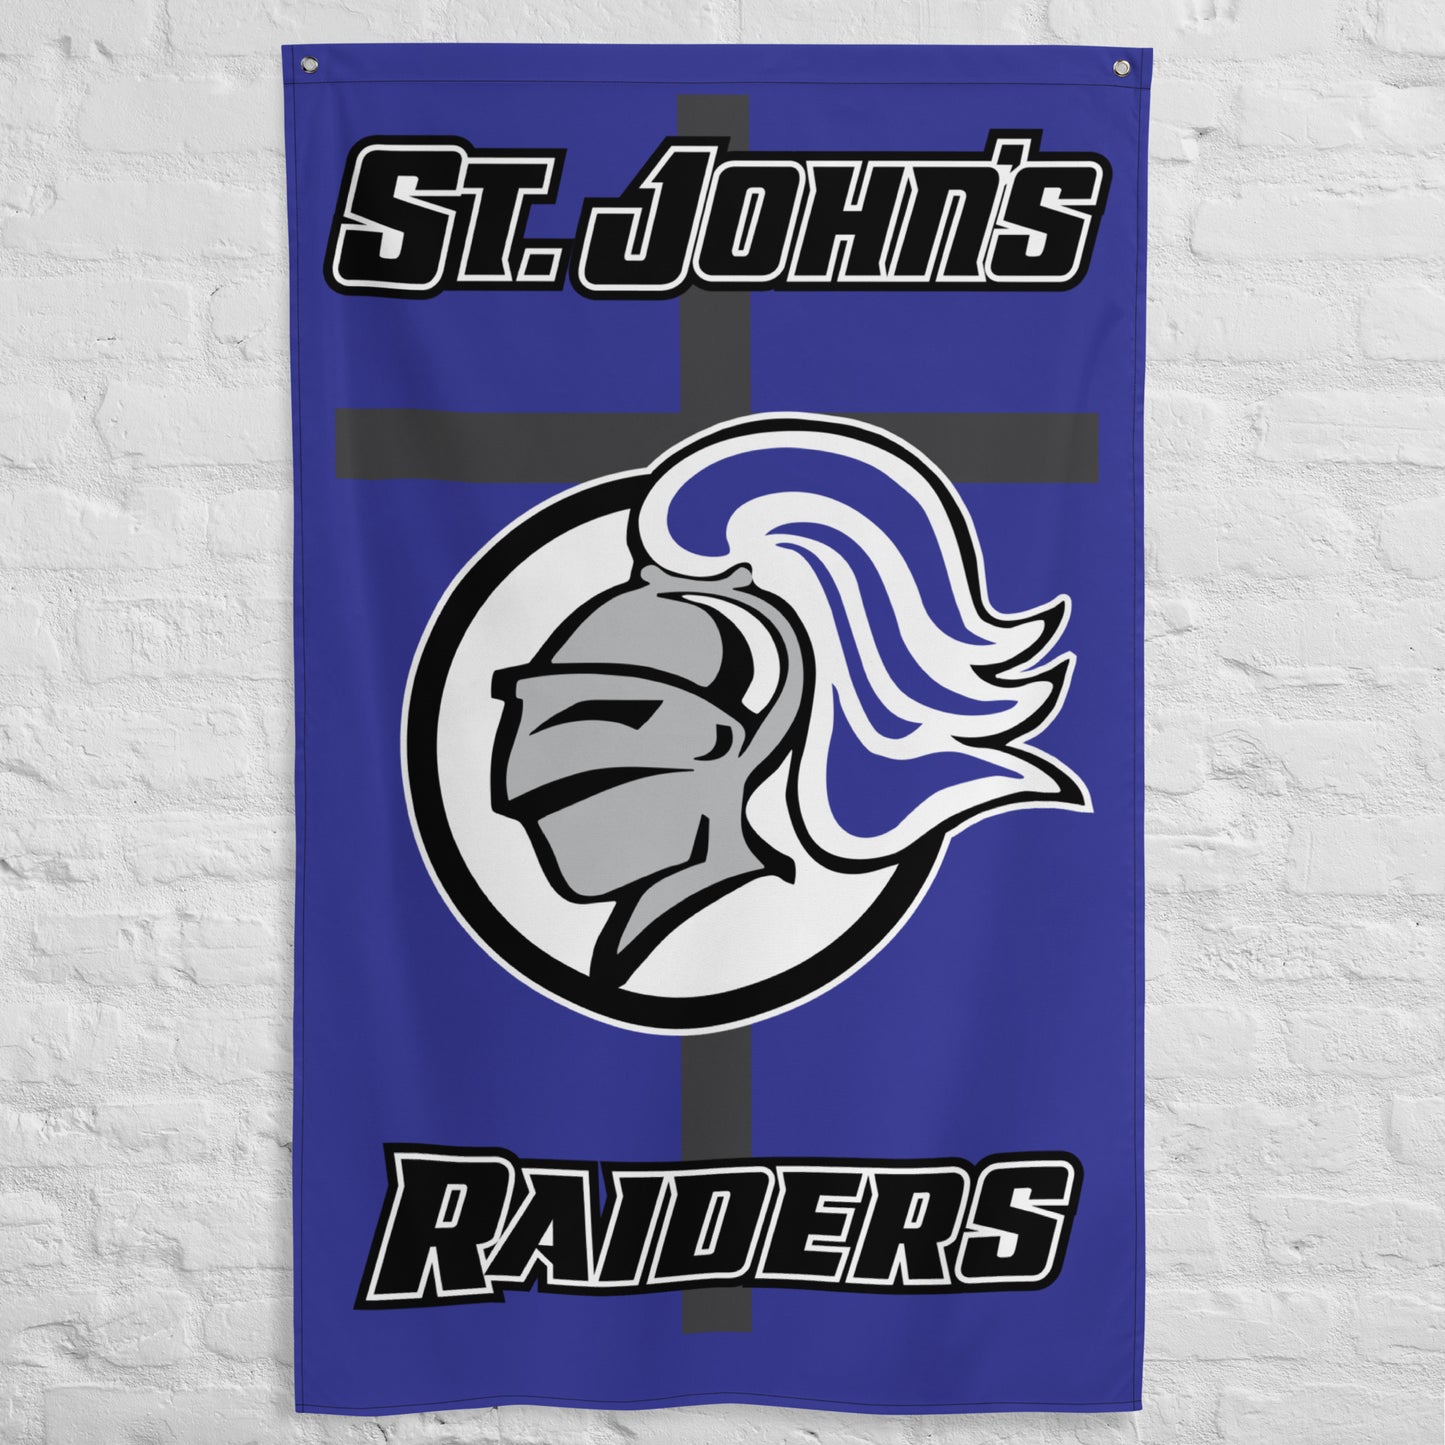 St Johns Raiders 3' x 5' Blue Wall Flag